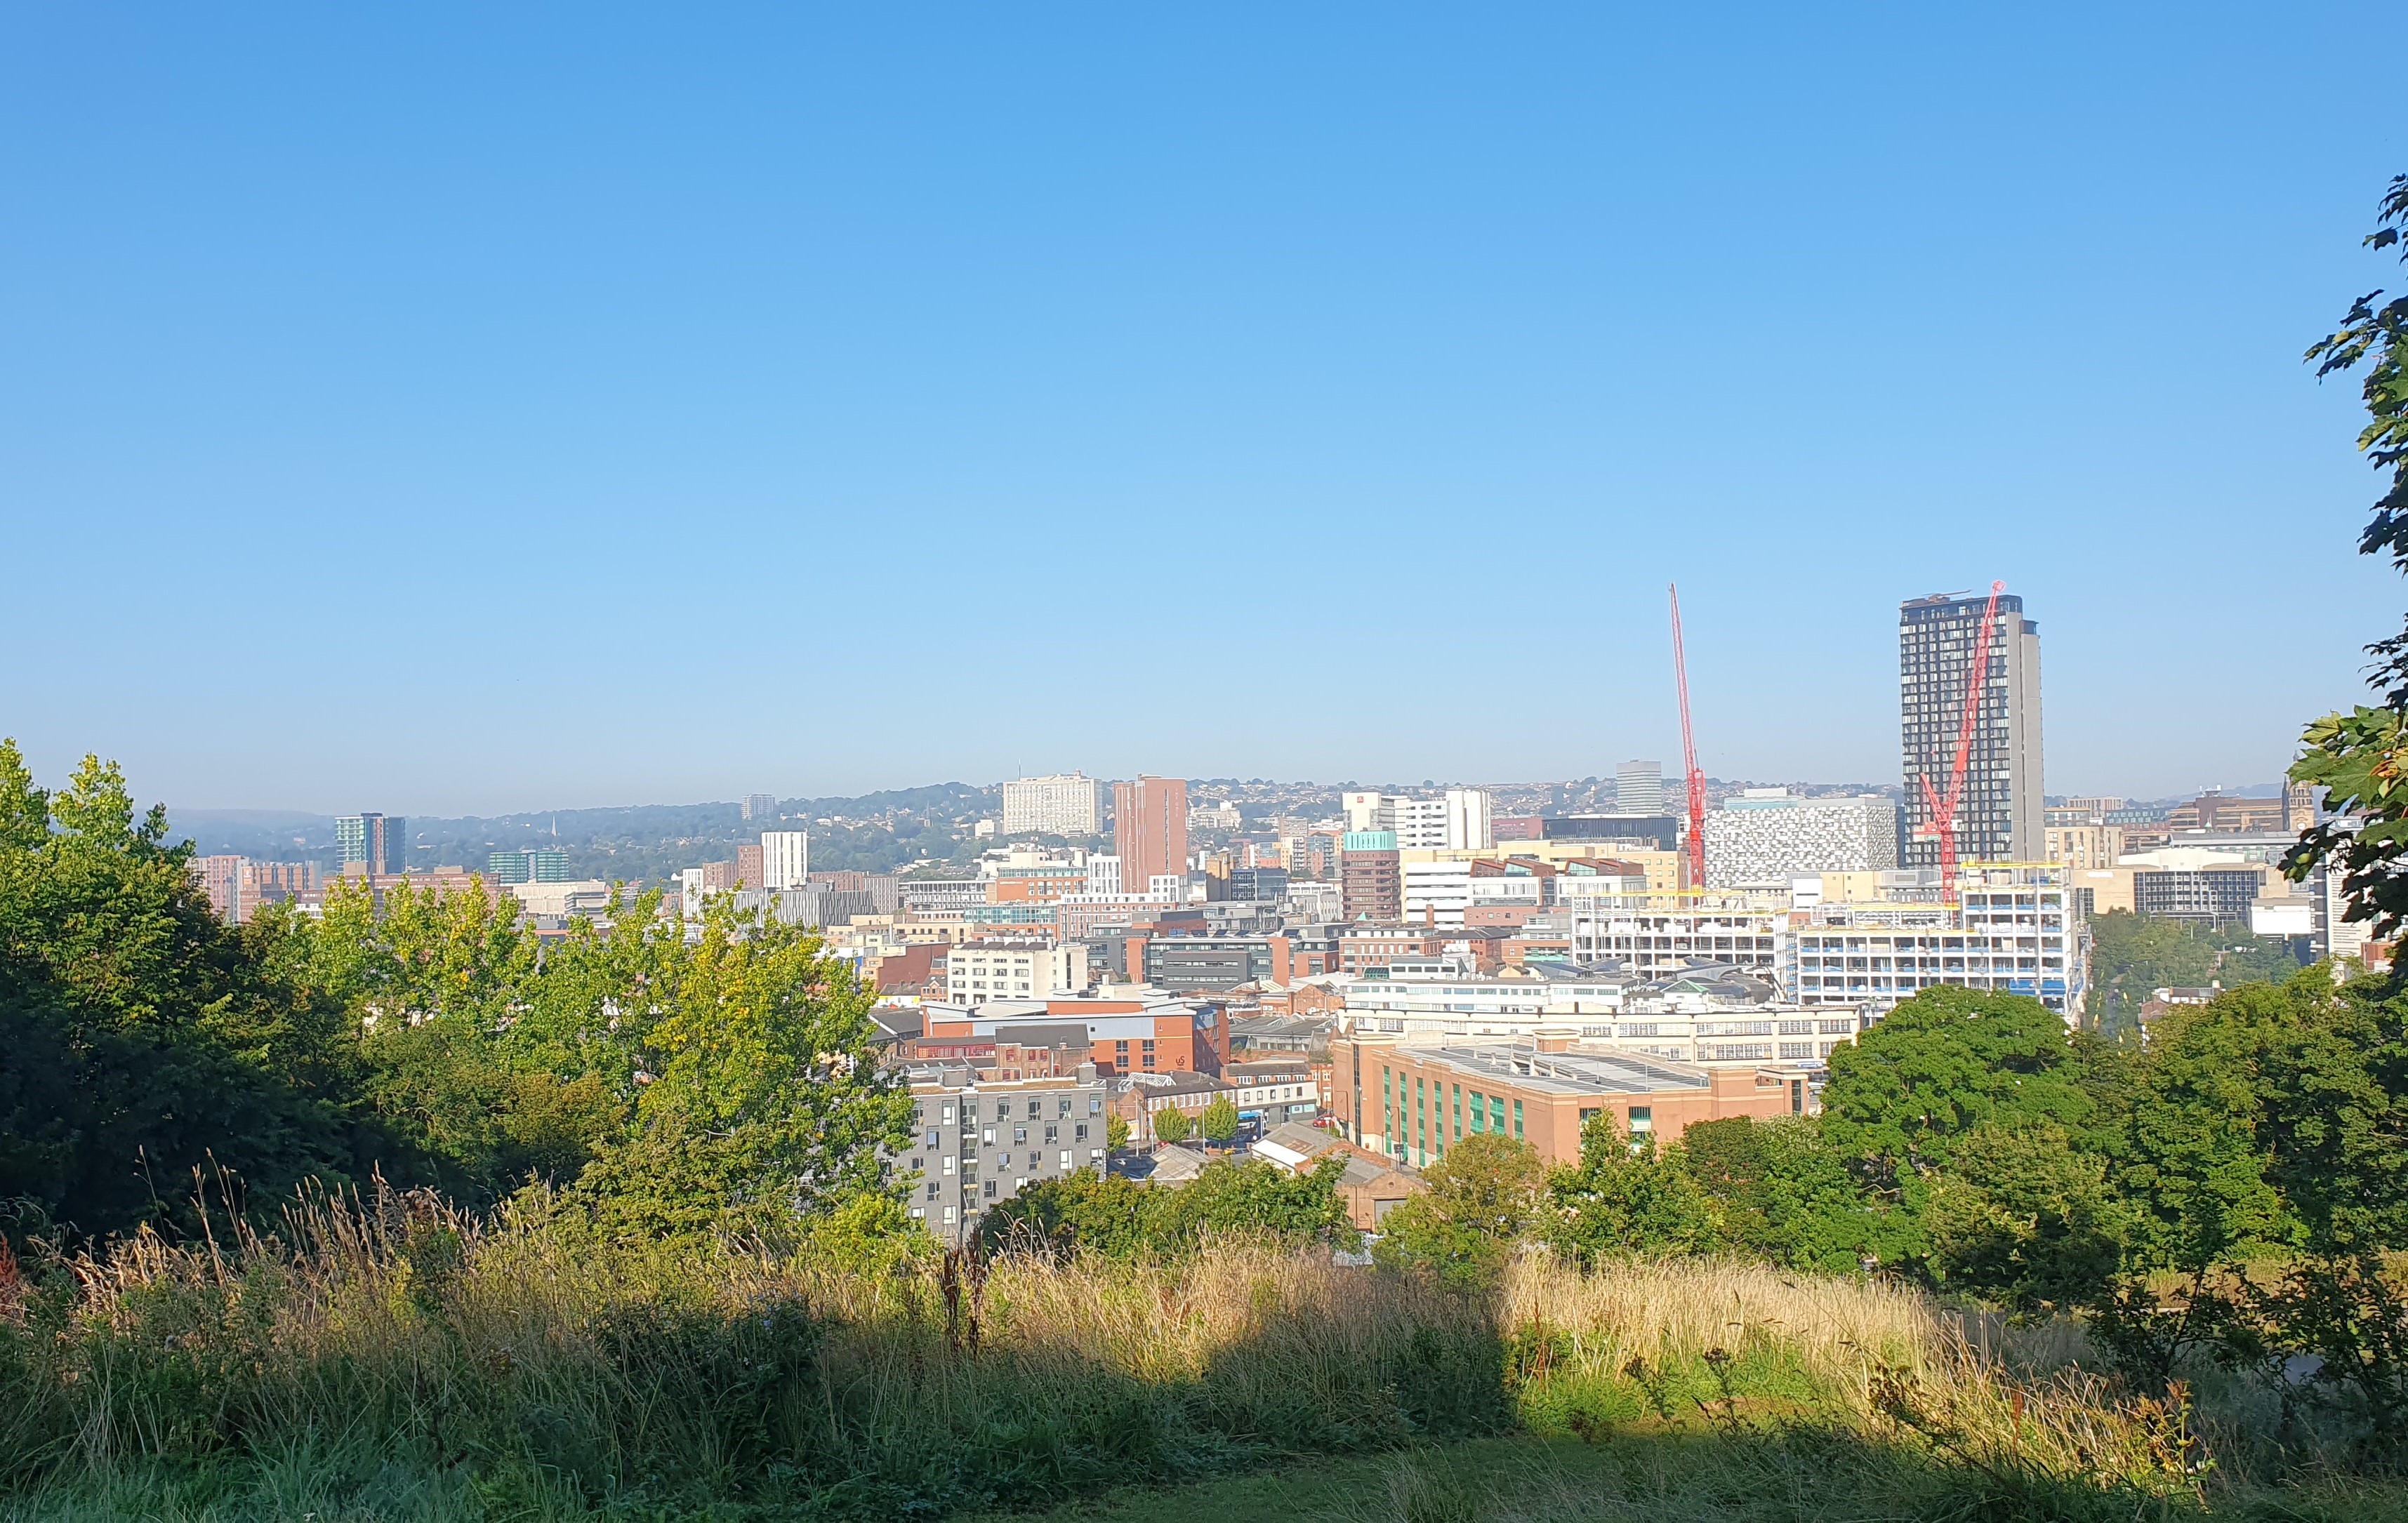 The Sheffield skyline